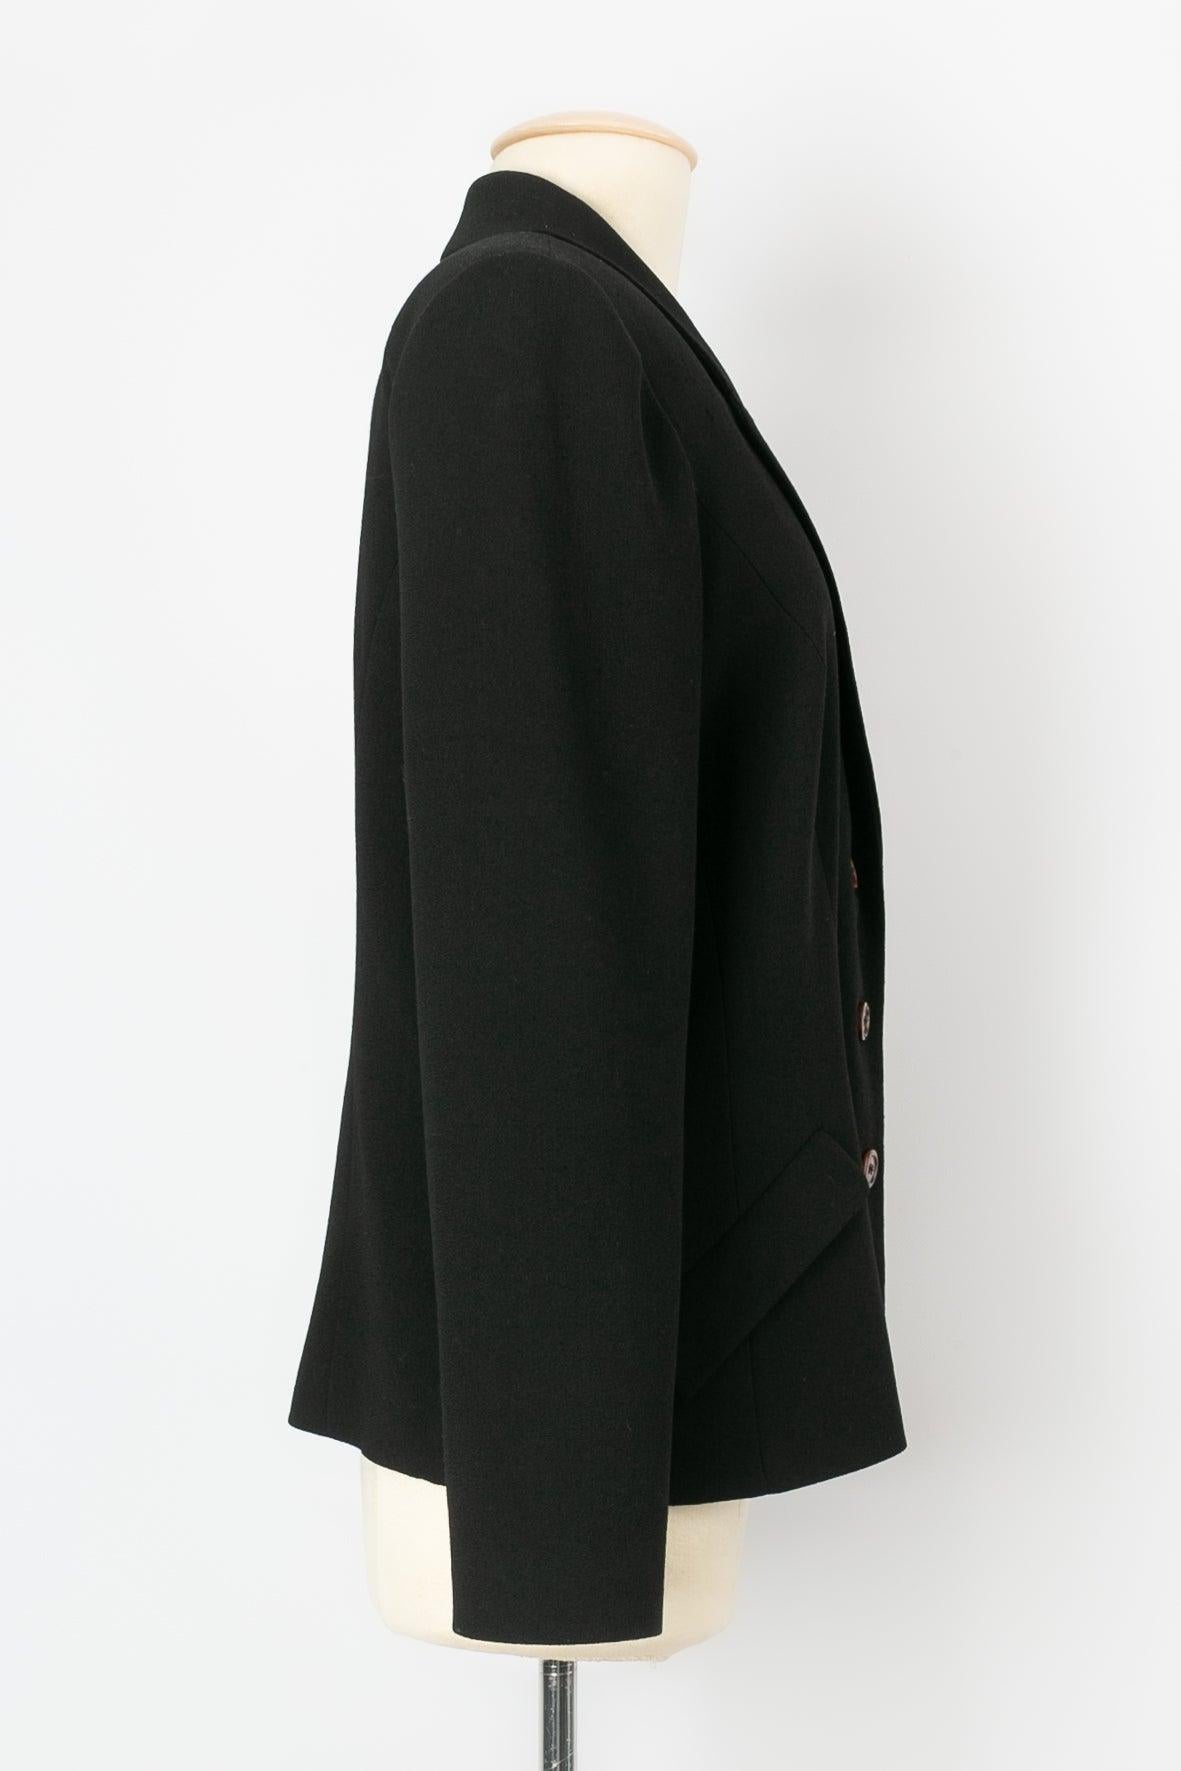 Women's Christian Lacroix Black Wool Blazer Jacket